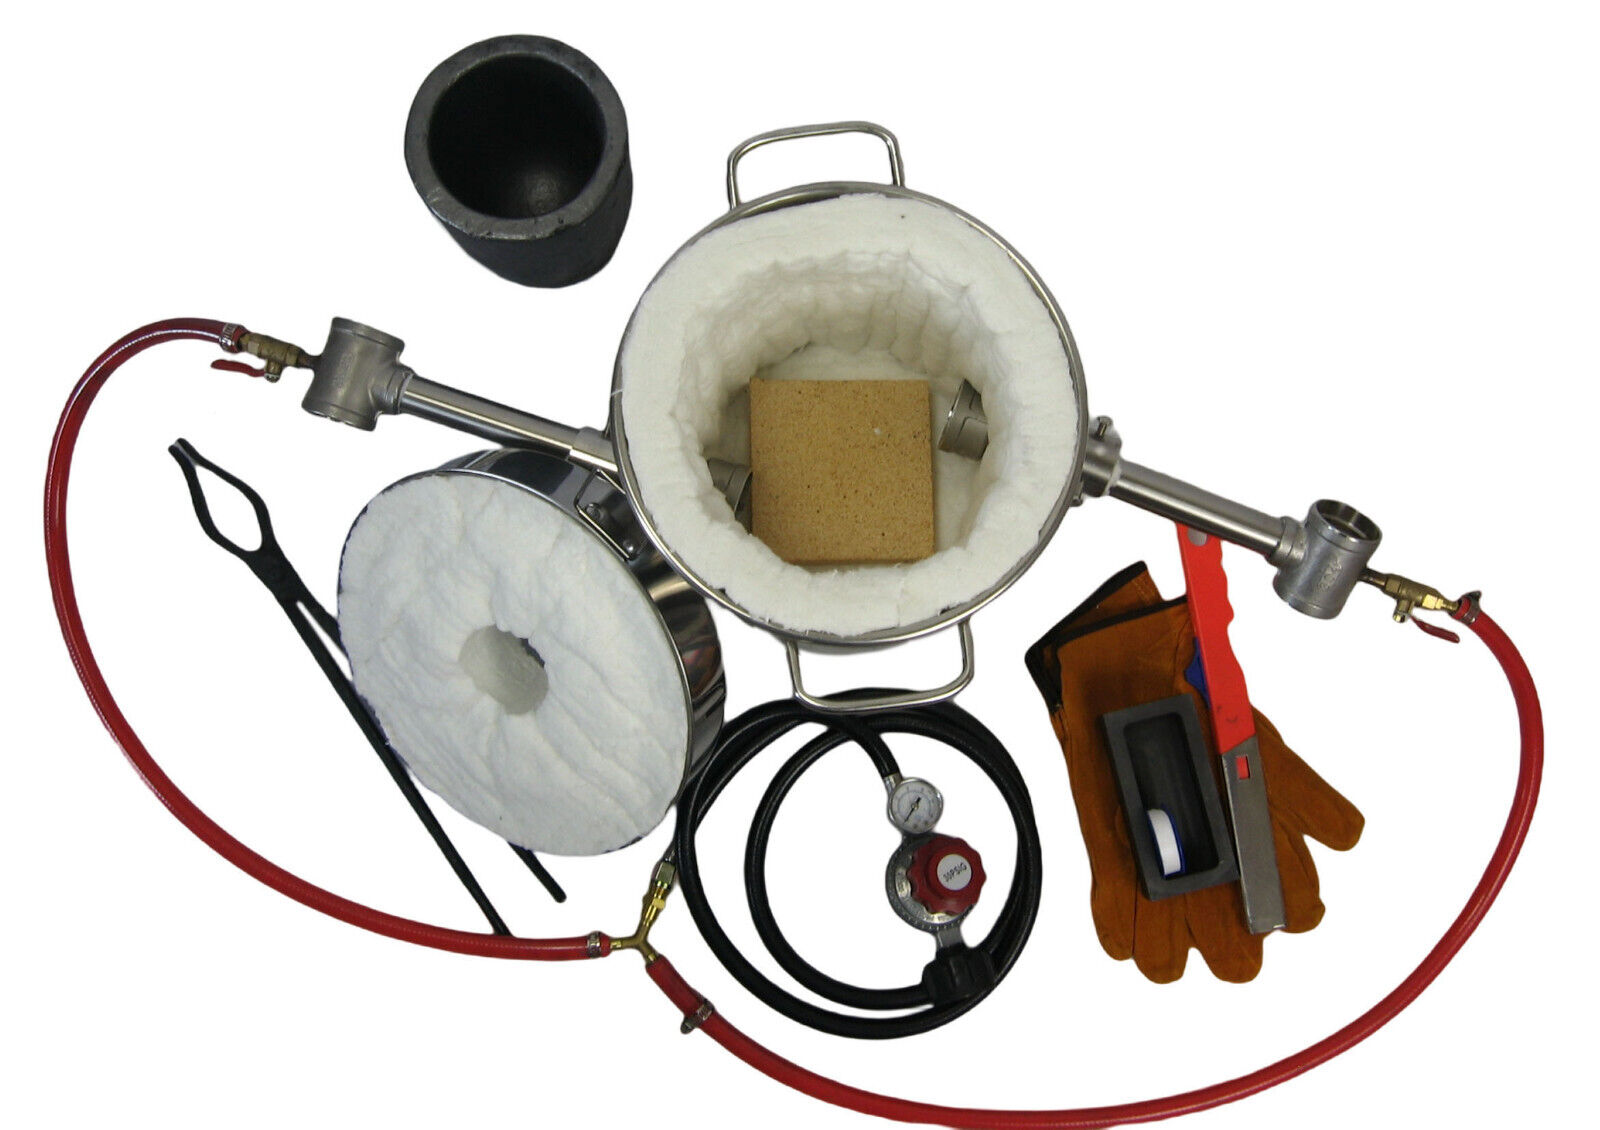 LSMIITTH Dual Burner 8 KG Gas Melting Furnace Kit Propane Forge Casting Tool